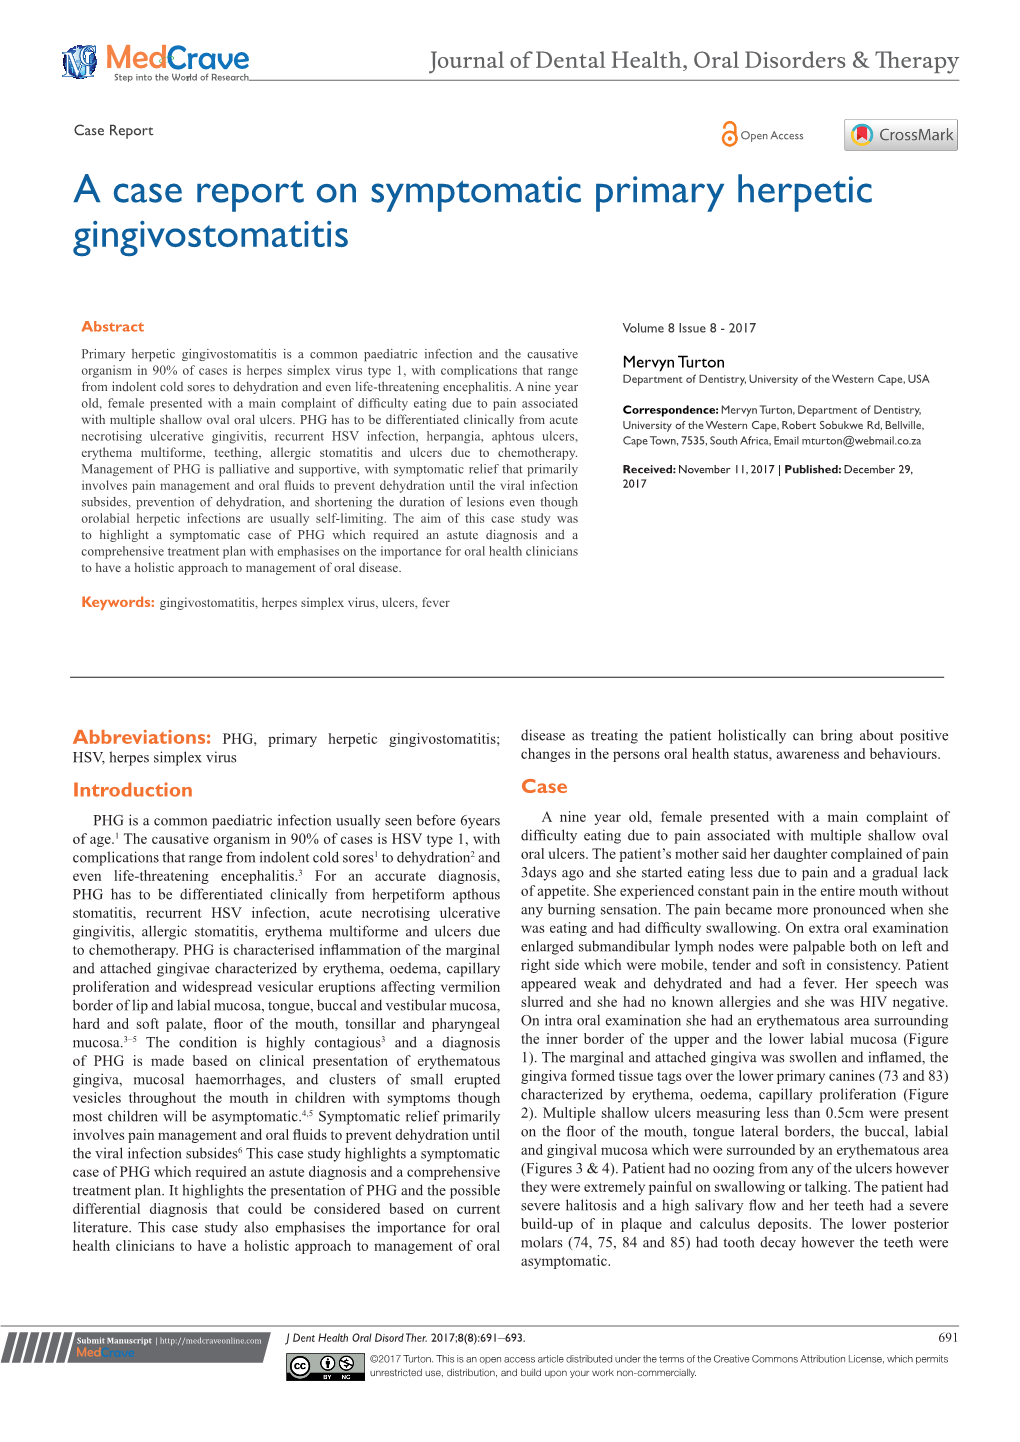 A Case Report on Symptomatic Primary Herpetic Gingivostomatitis